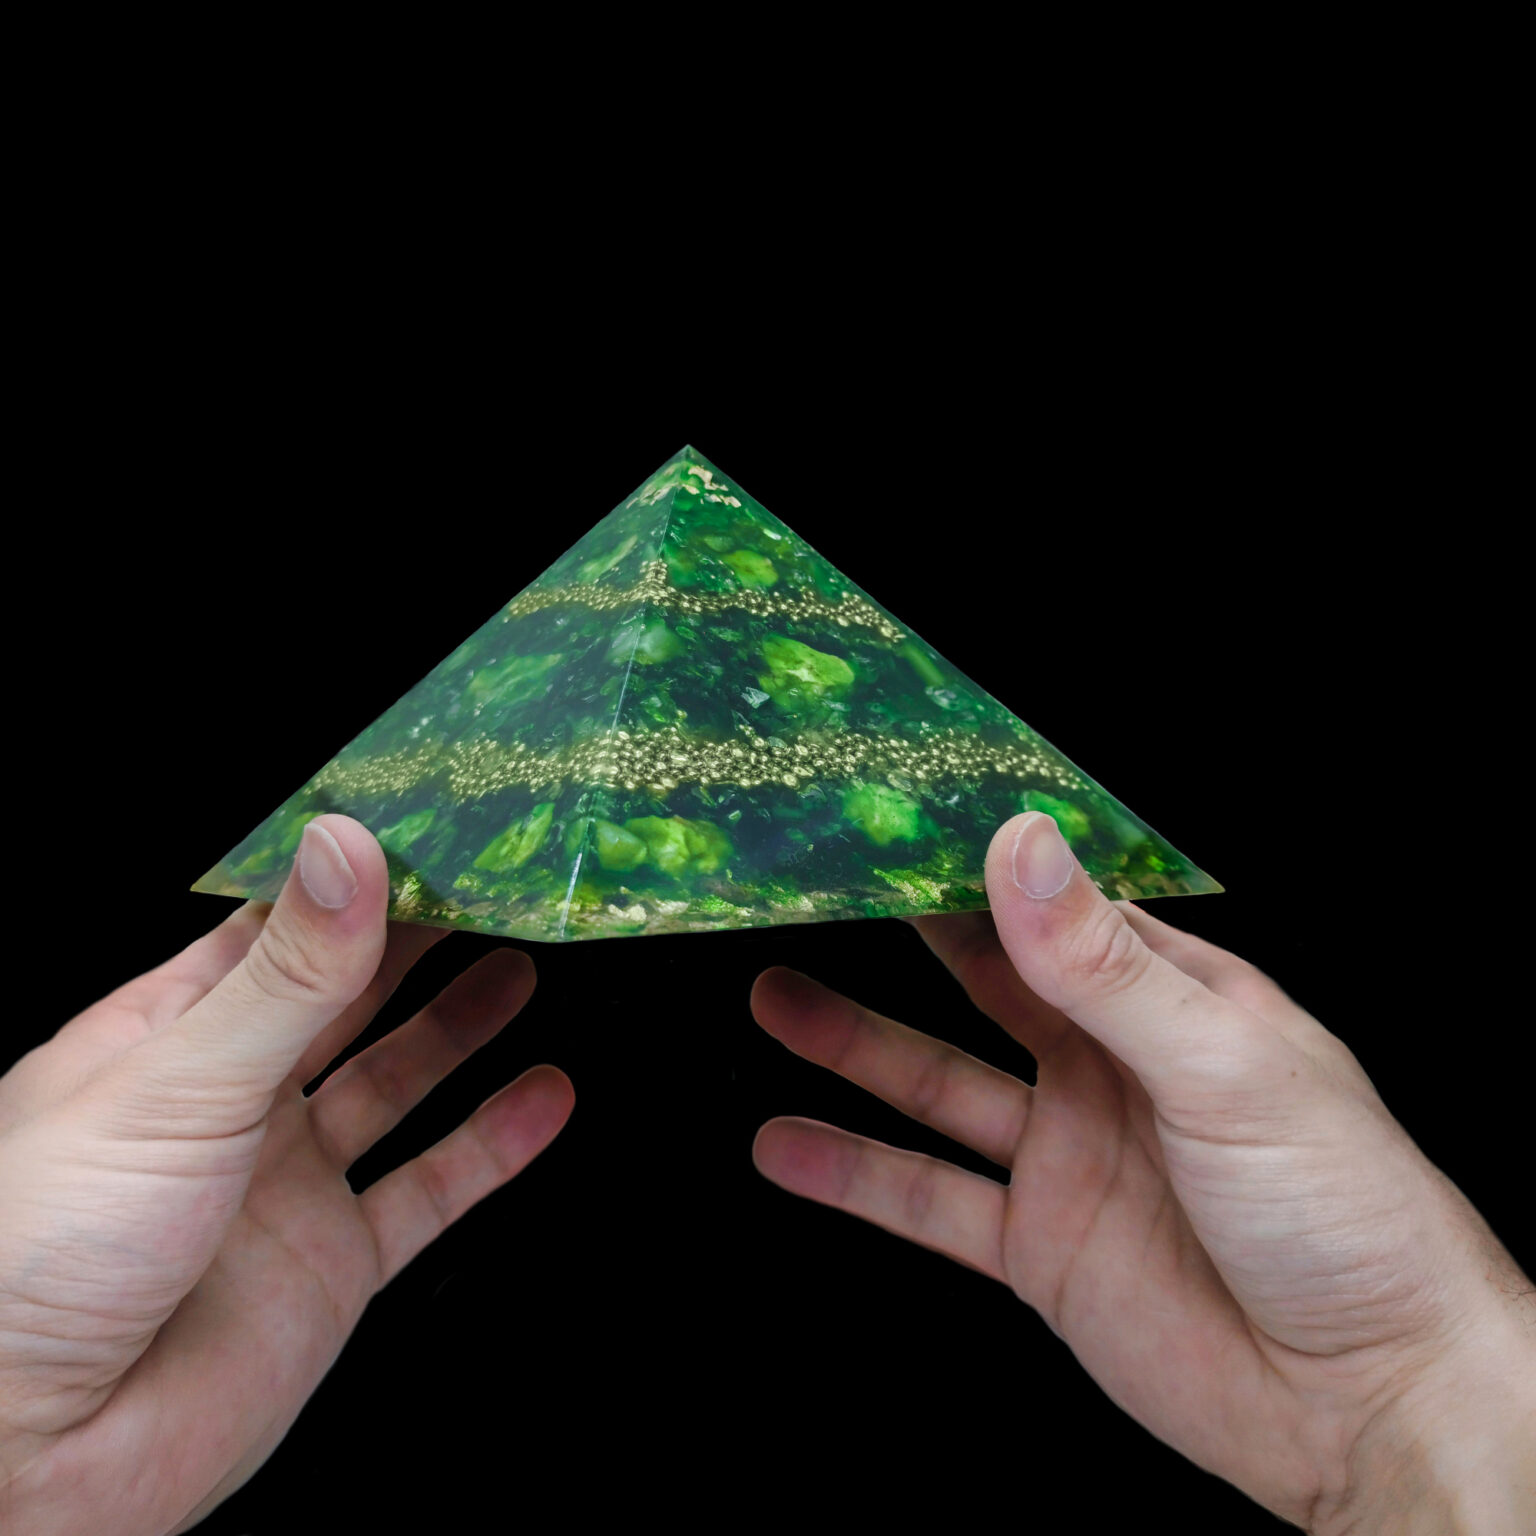 15cm + Orgonit Pyramide mit hellgrünen Edelsteinen & goldenen Metallperlen.